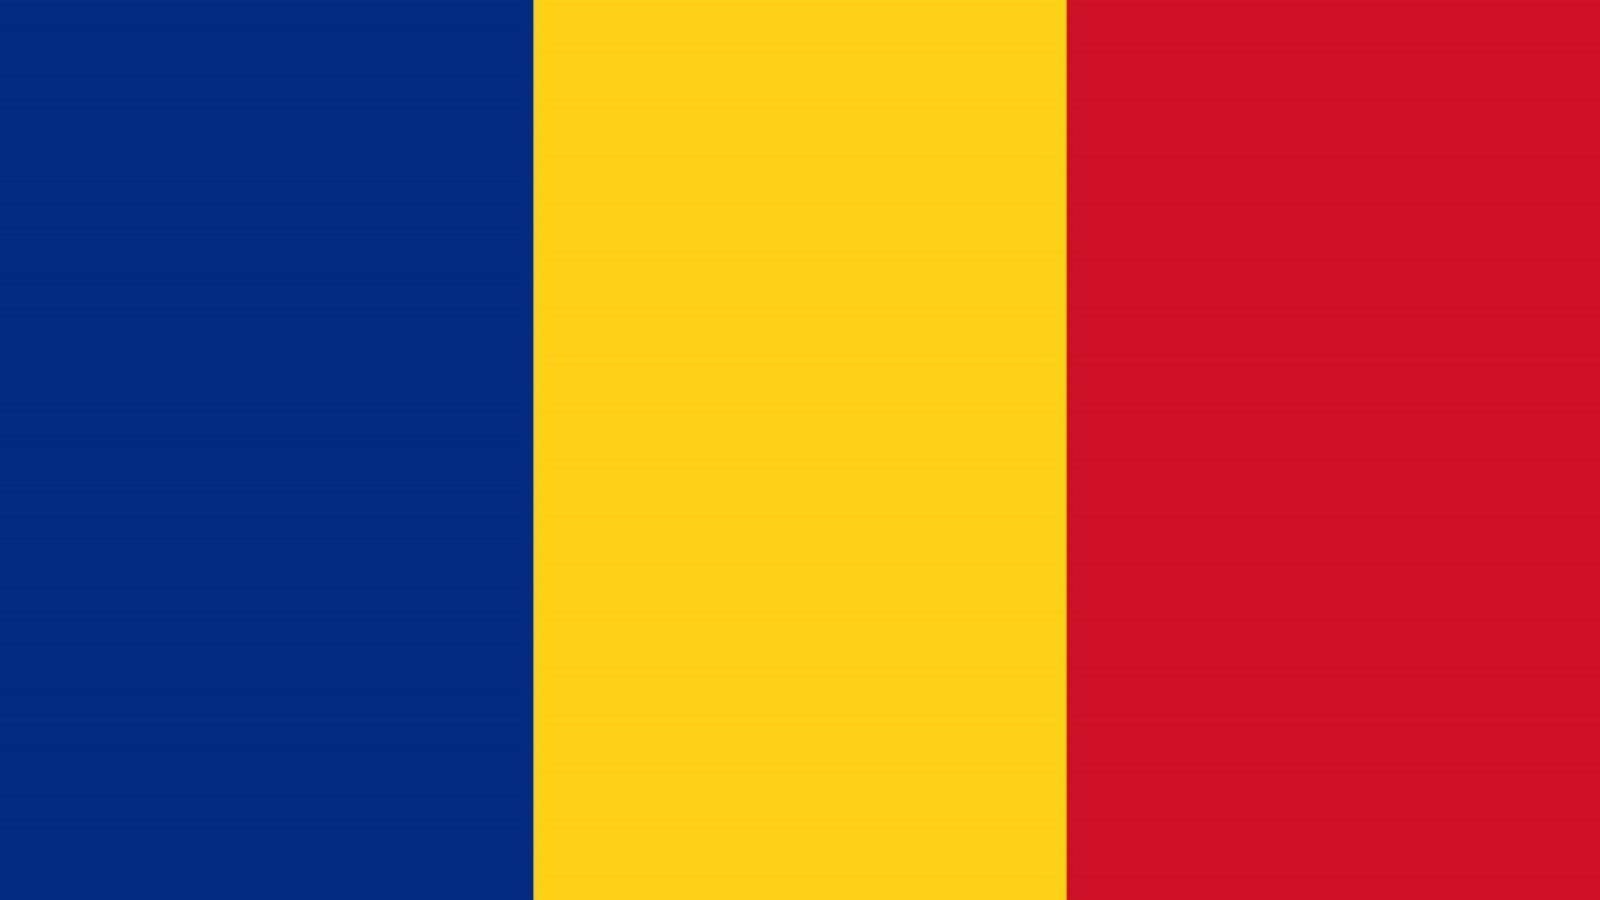 Roemeense regering sluit winkels vroege resultaten